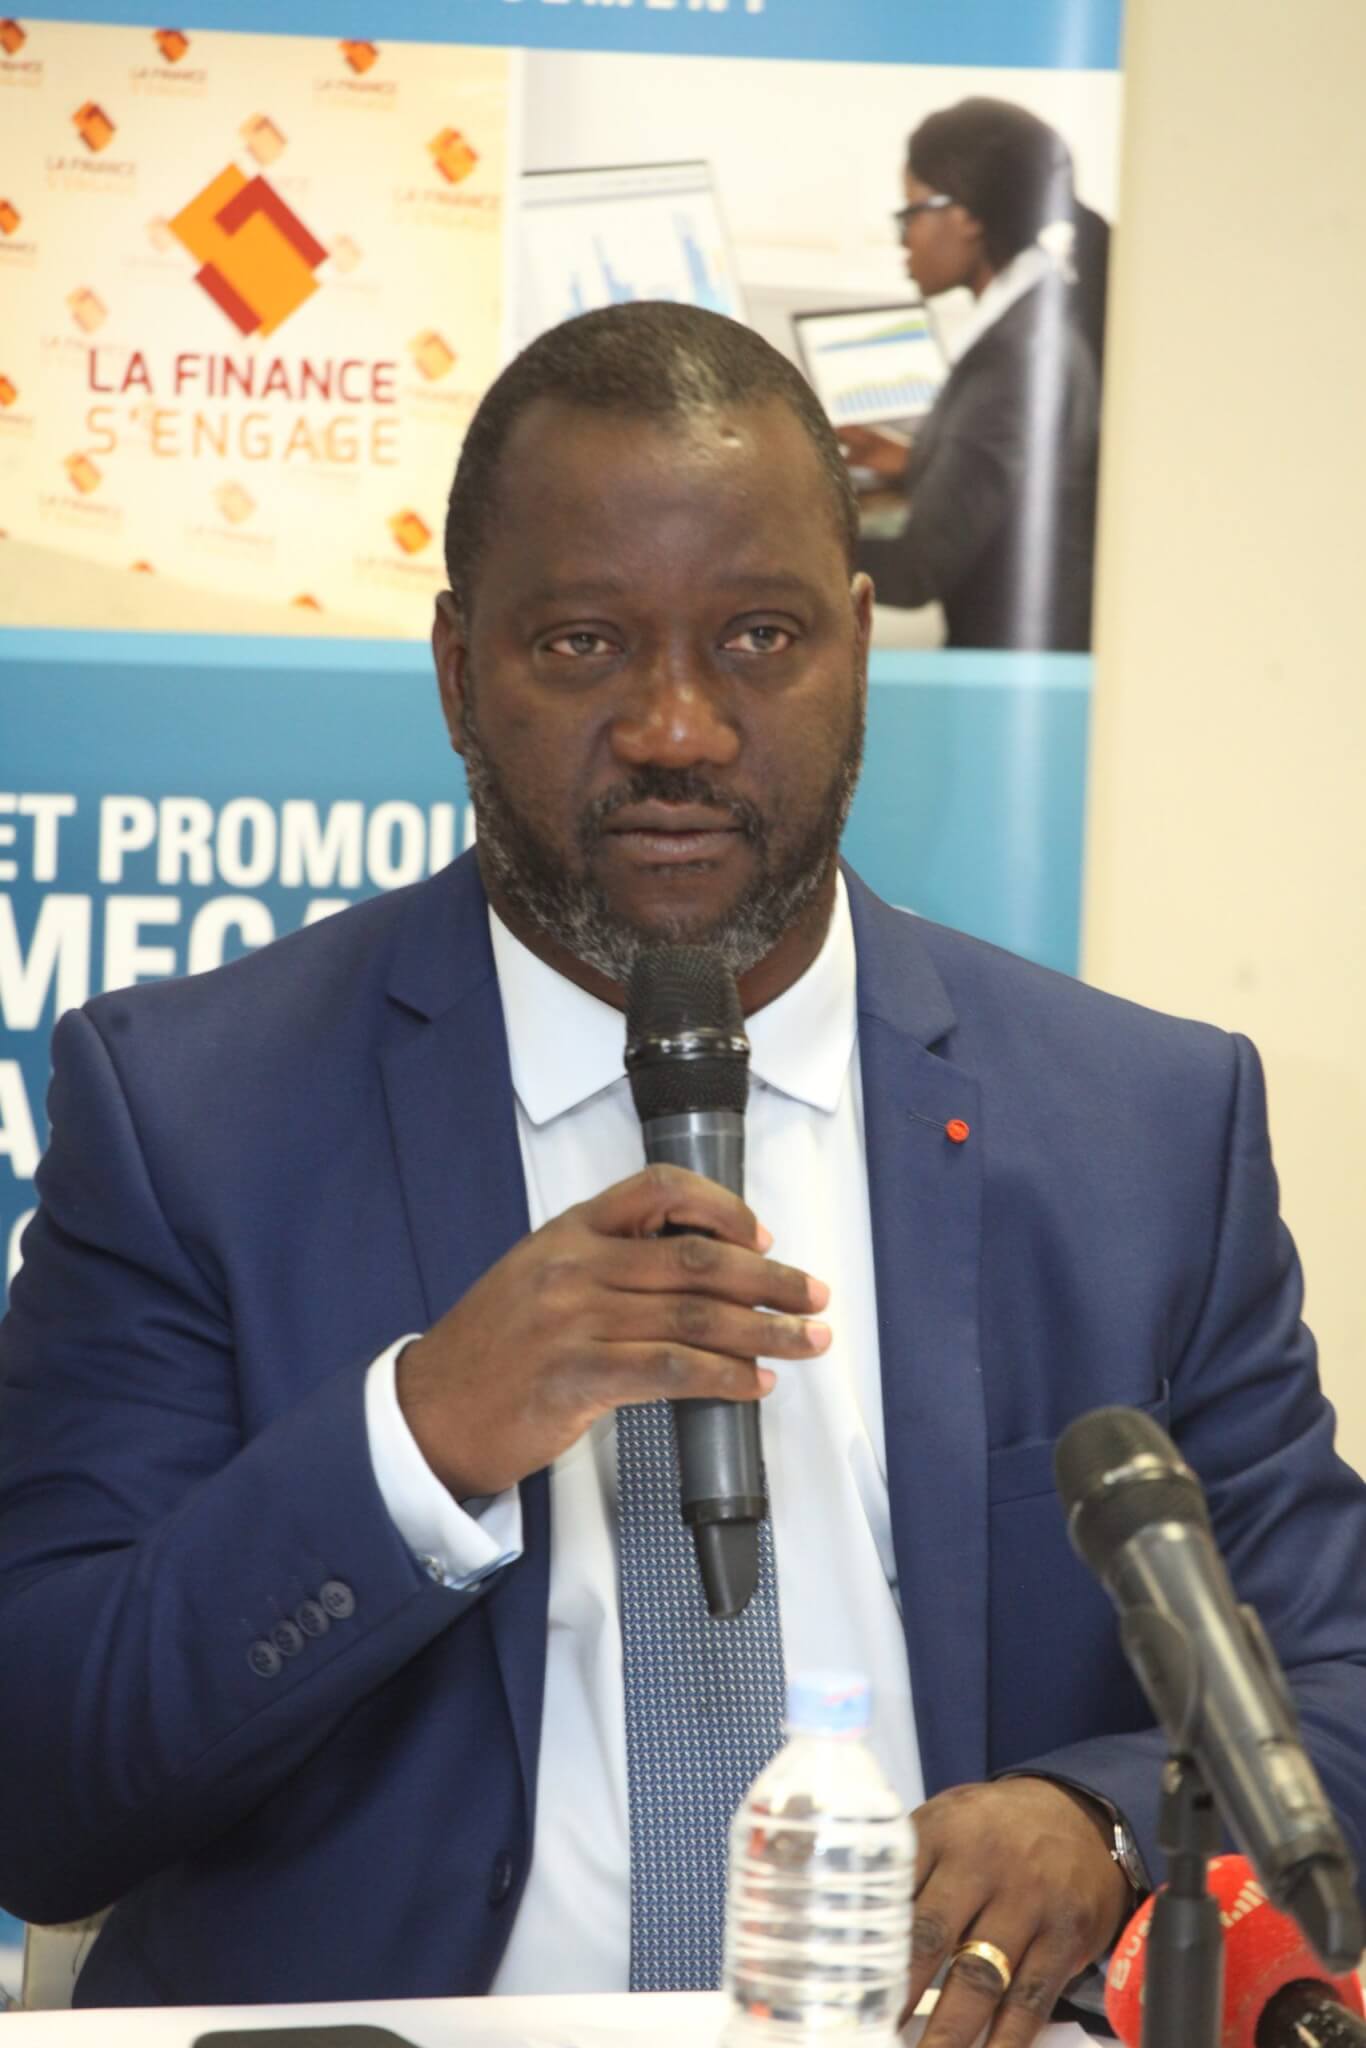 Le banquier ivoirien Daouda Coulibaly promu DG (adjoint) du groupe Attijariwafa bank